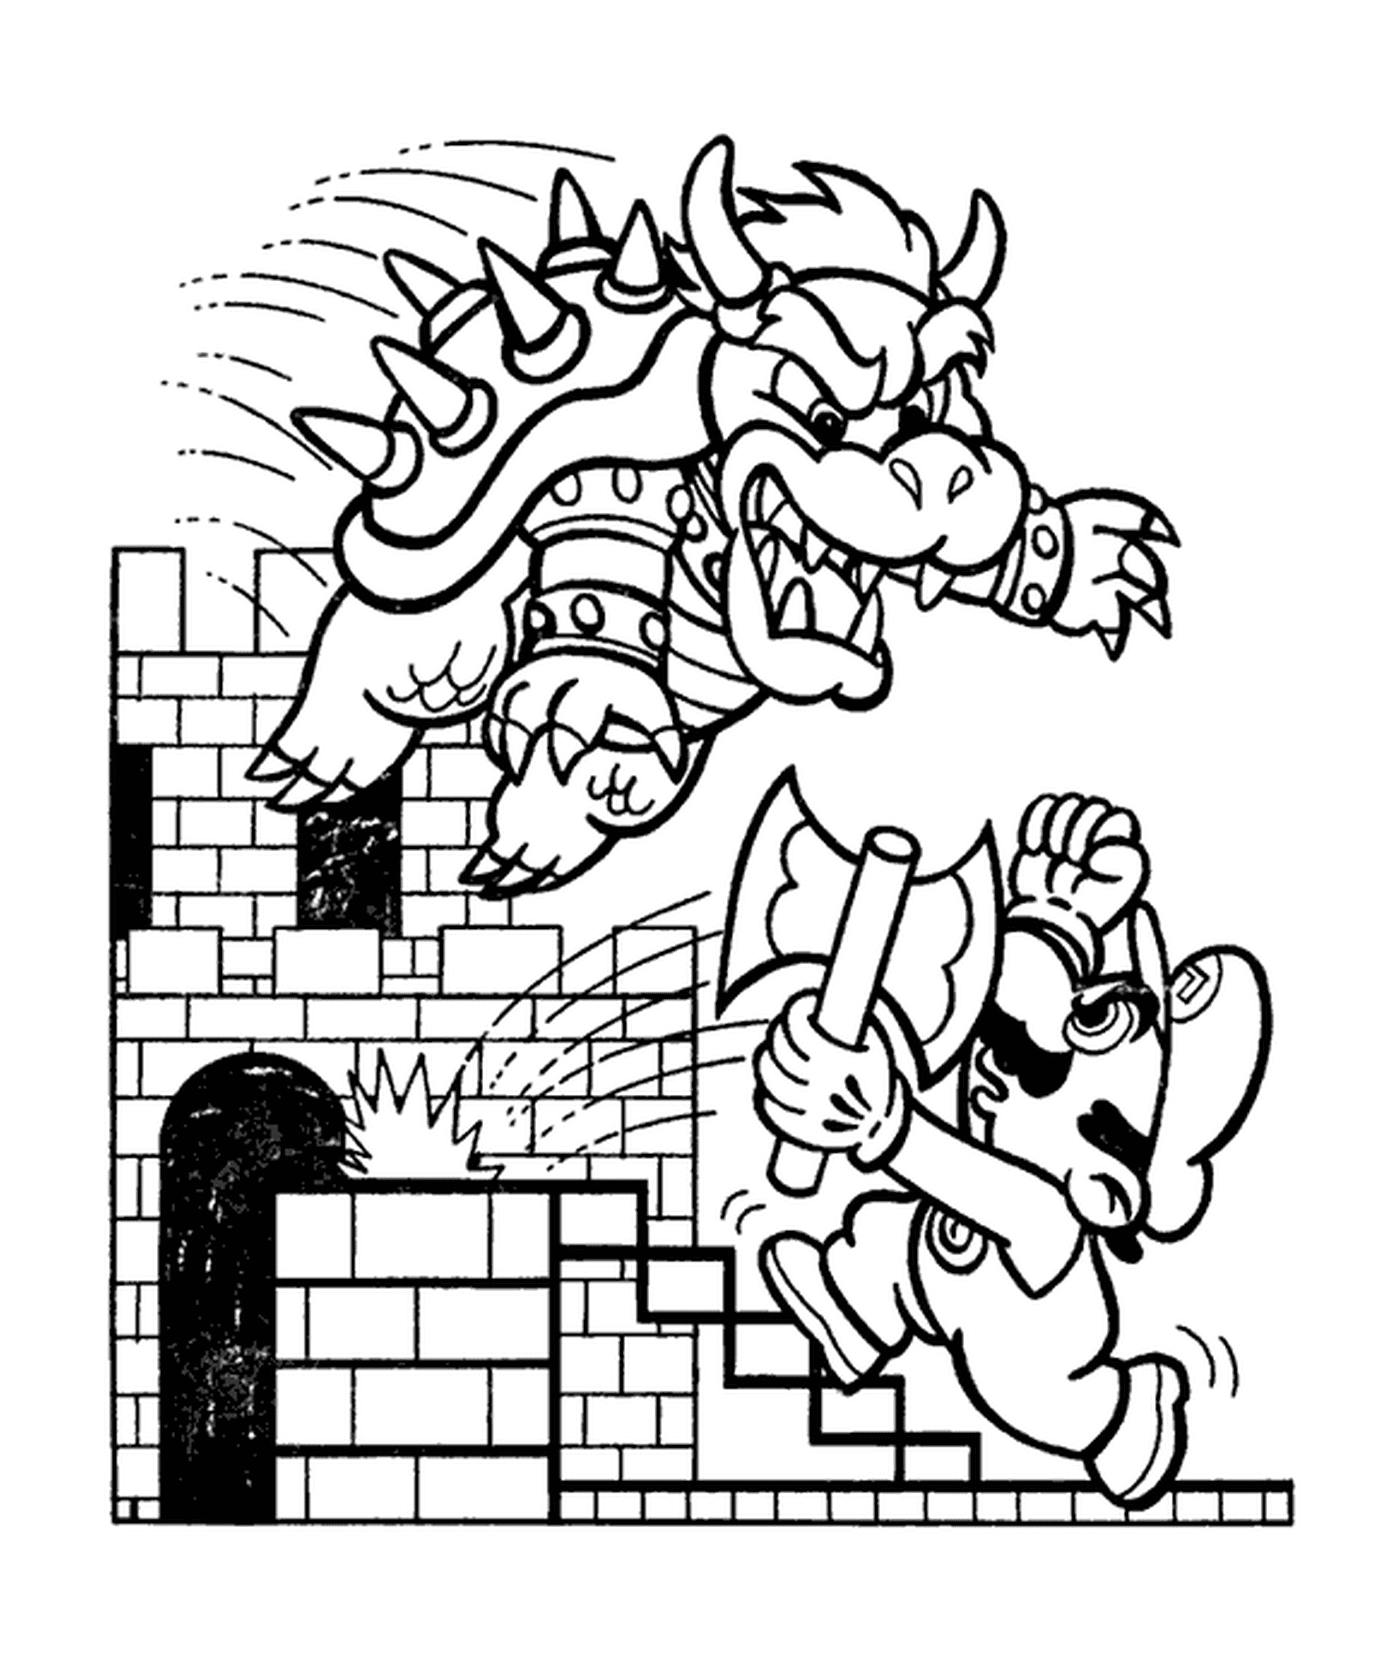   Bowser attaque Mario avec fureur 